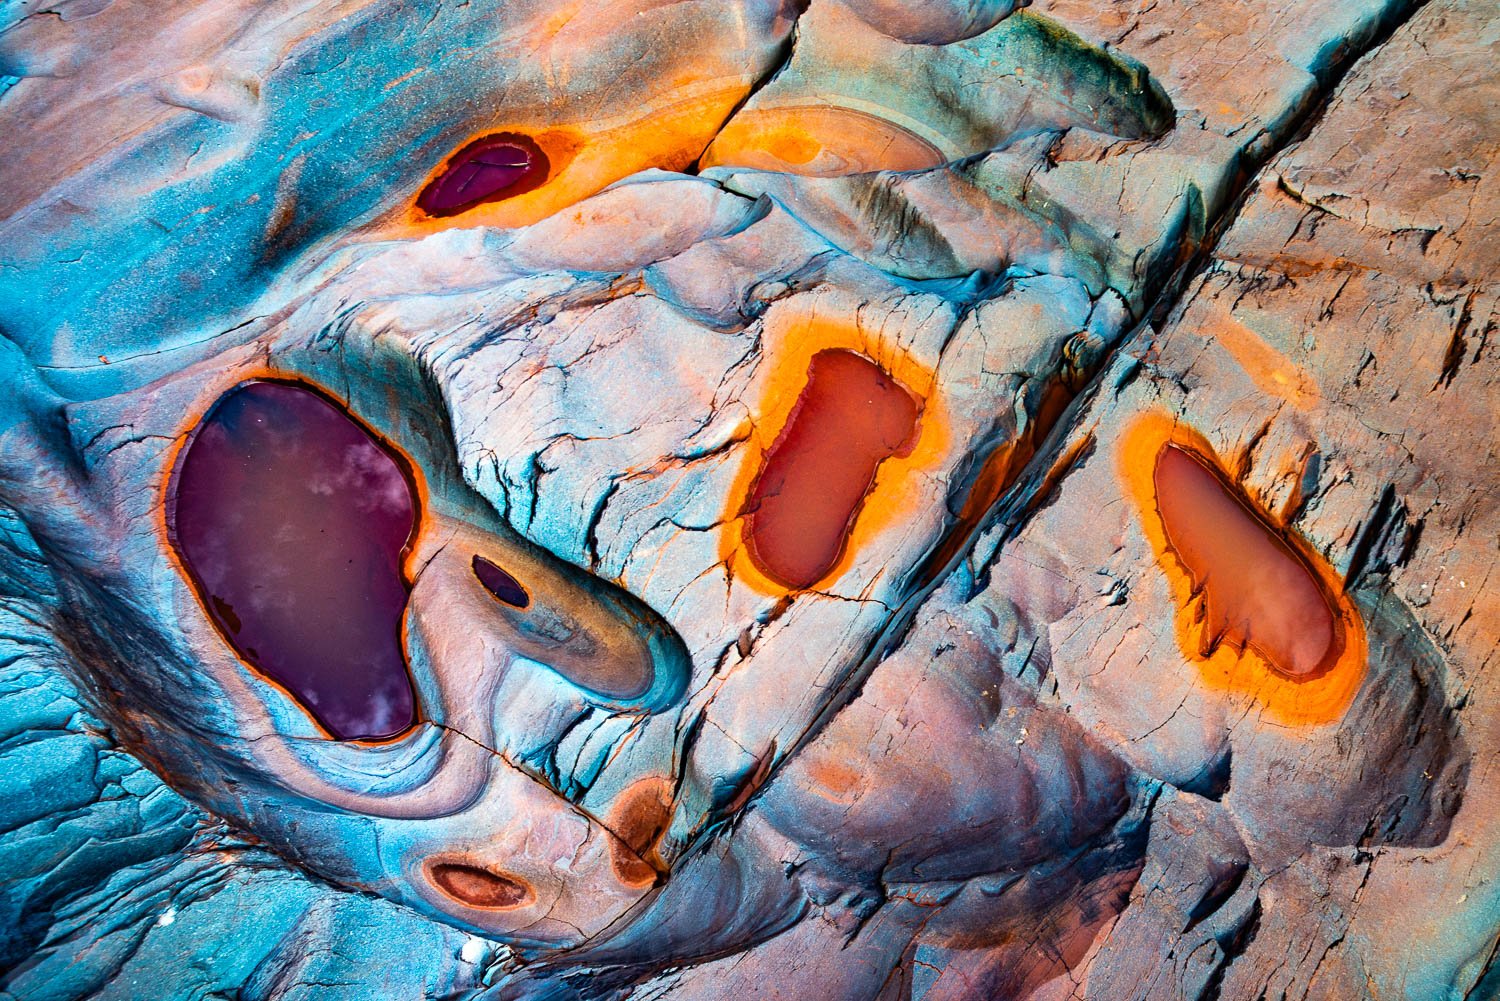 Artwork of big colorful jewels on a beach-like surface, Jewels - Karijini, The Pilbara 